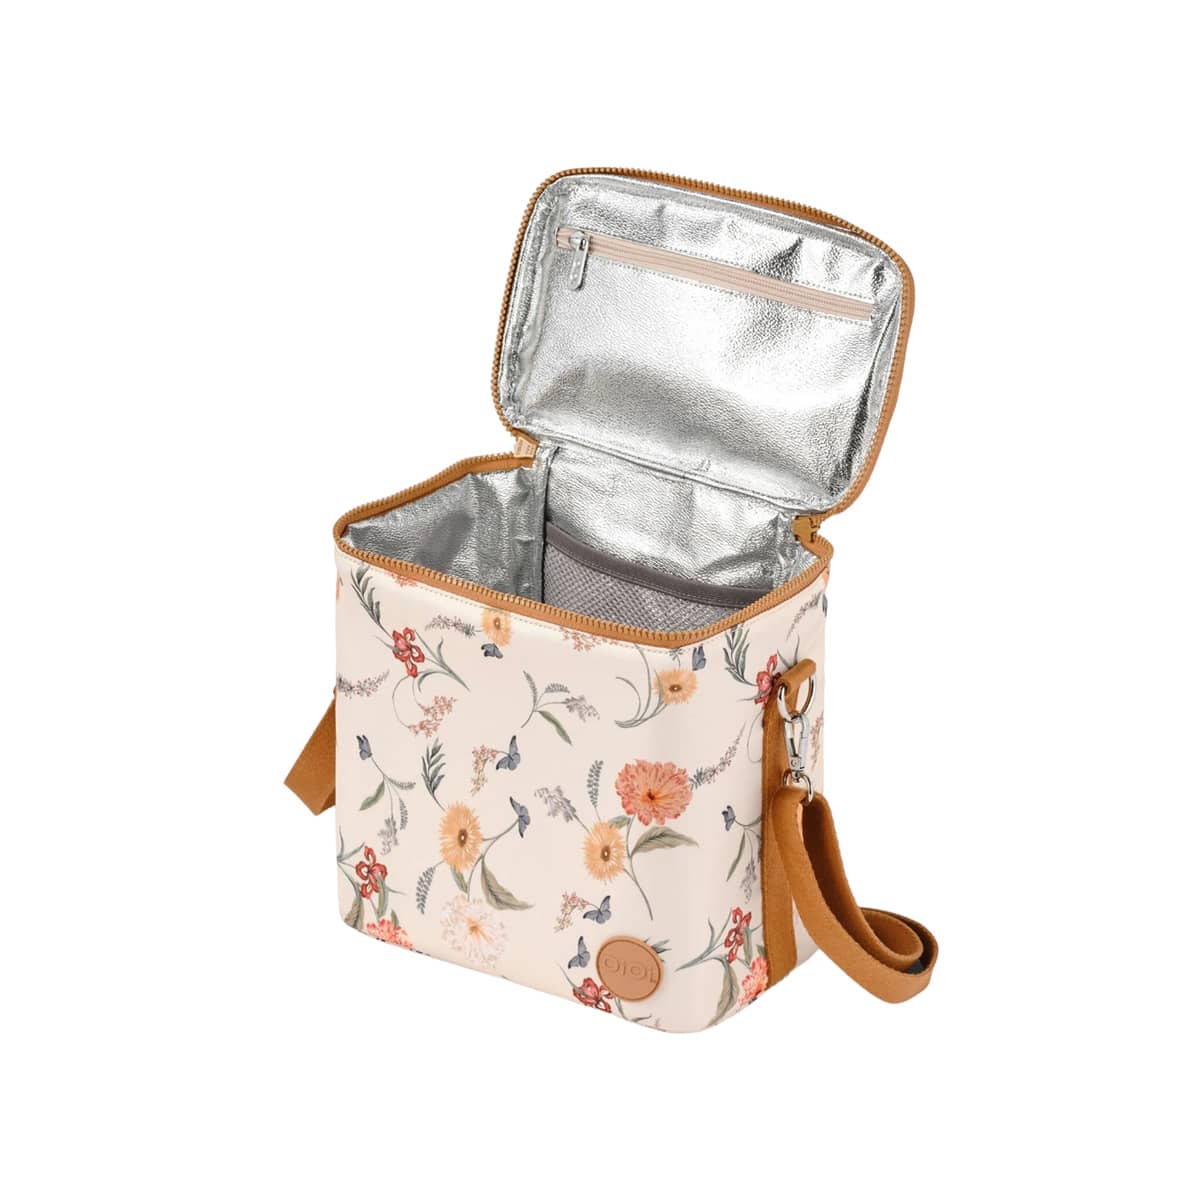 OiOi Midi Insulated Lunch Bag - Wildflower